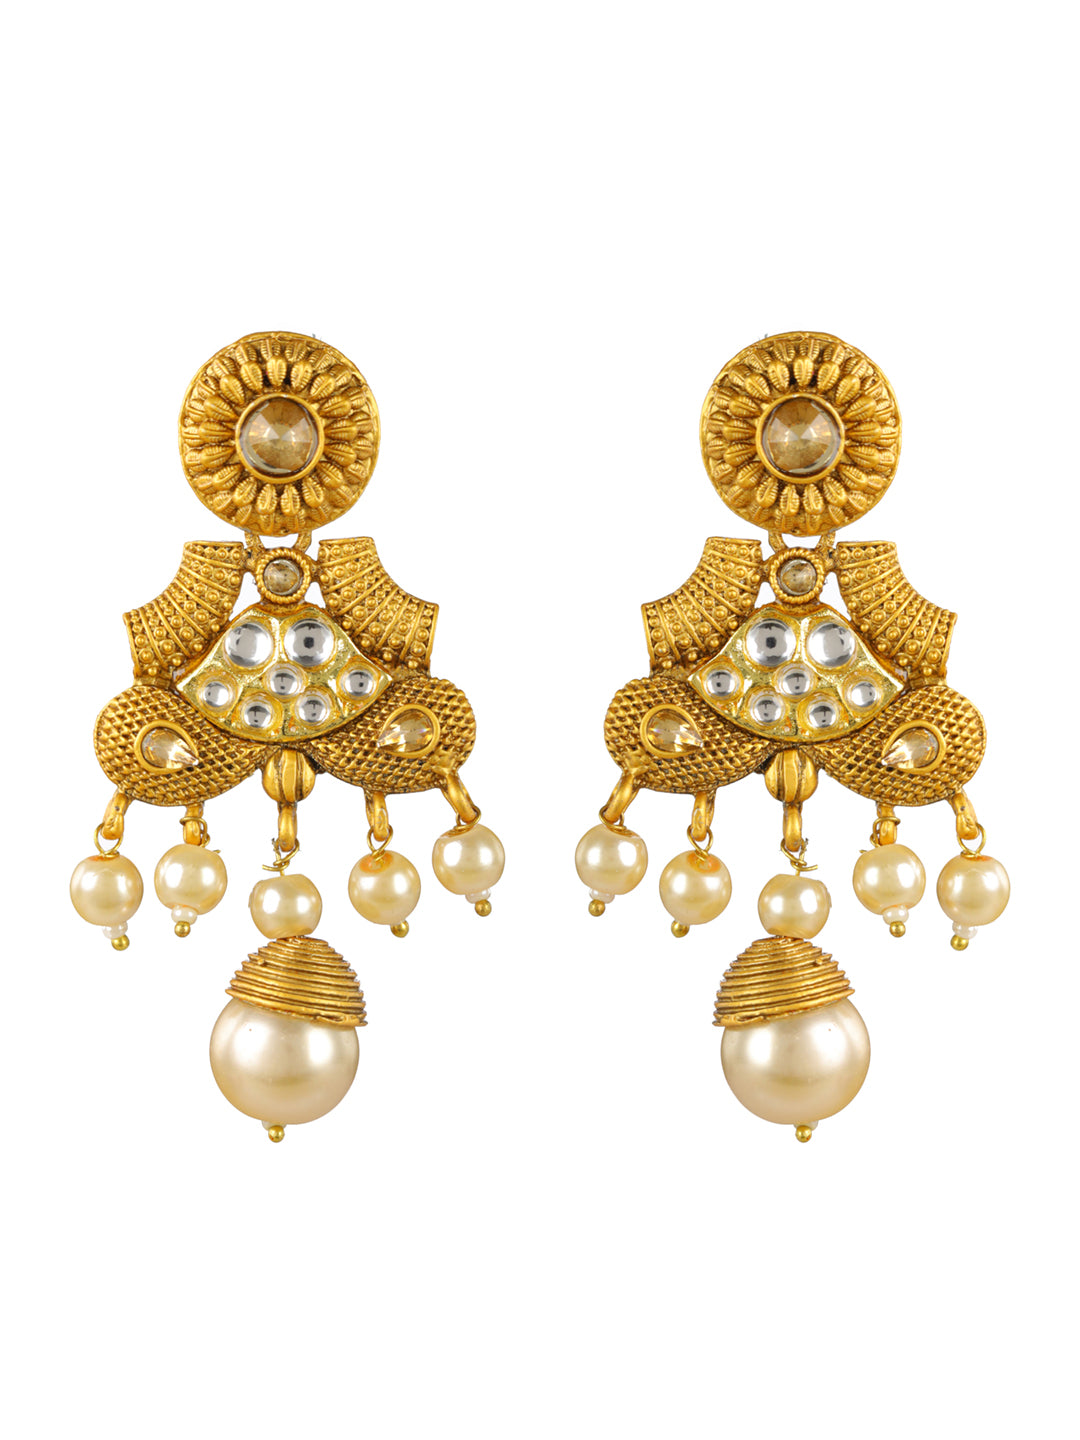 Priyaasi White Peacock Kundan Pearl Multilayer Gold-Plated Jewellery Set